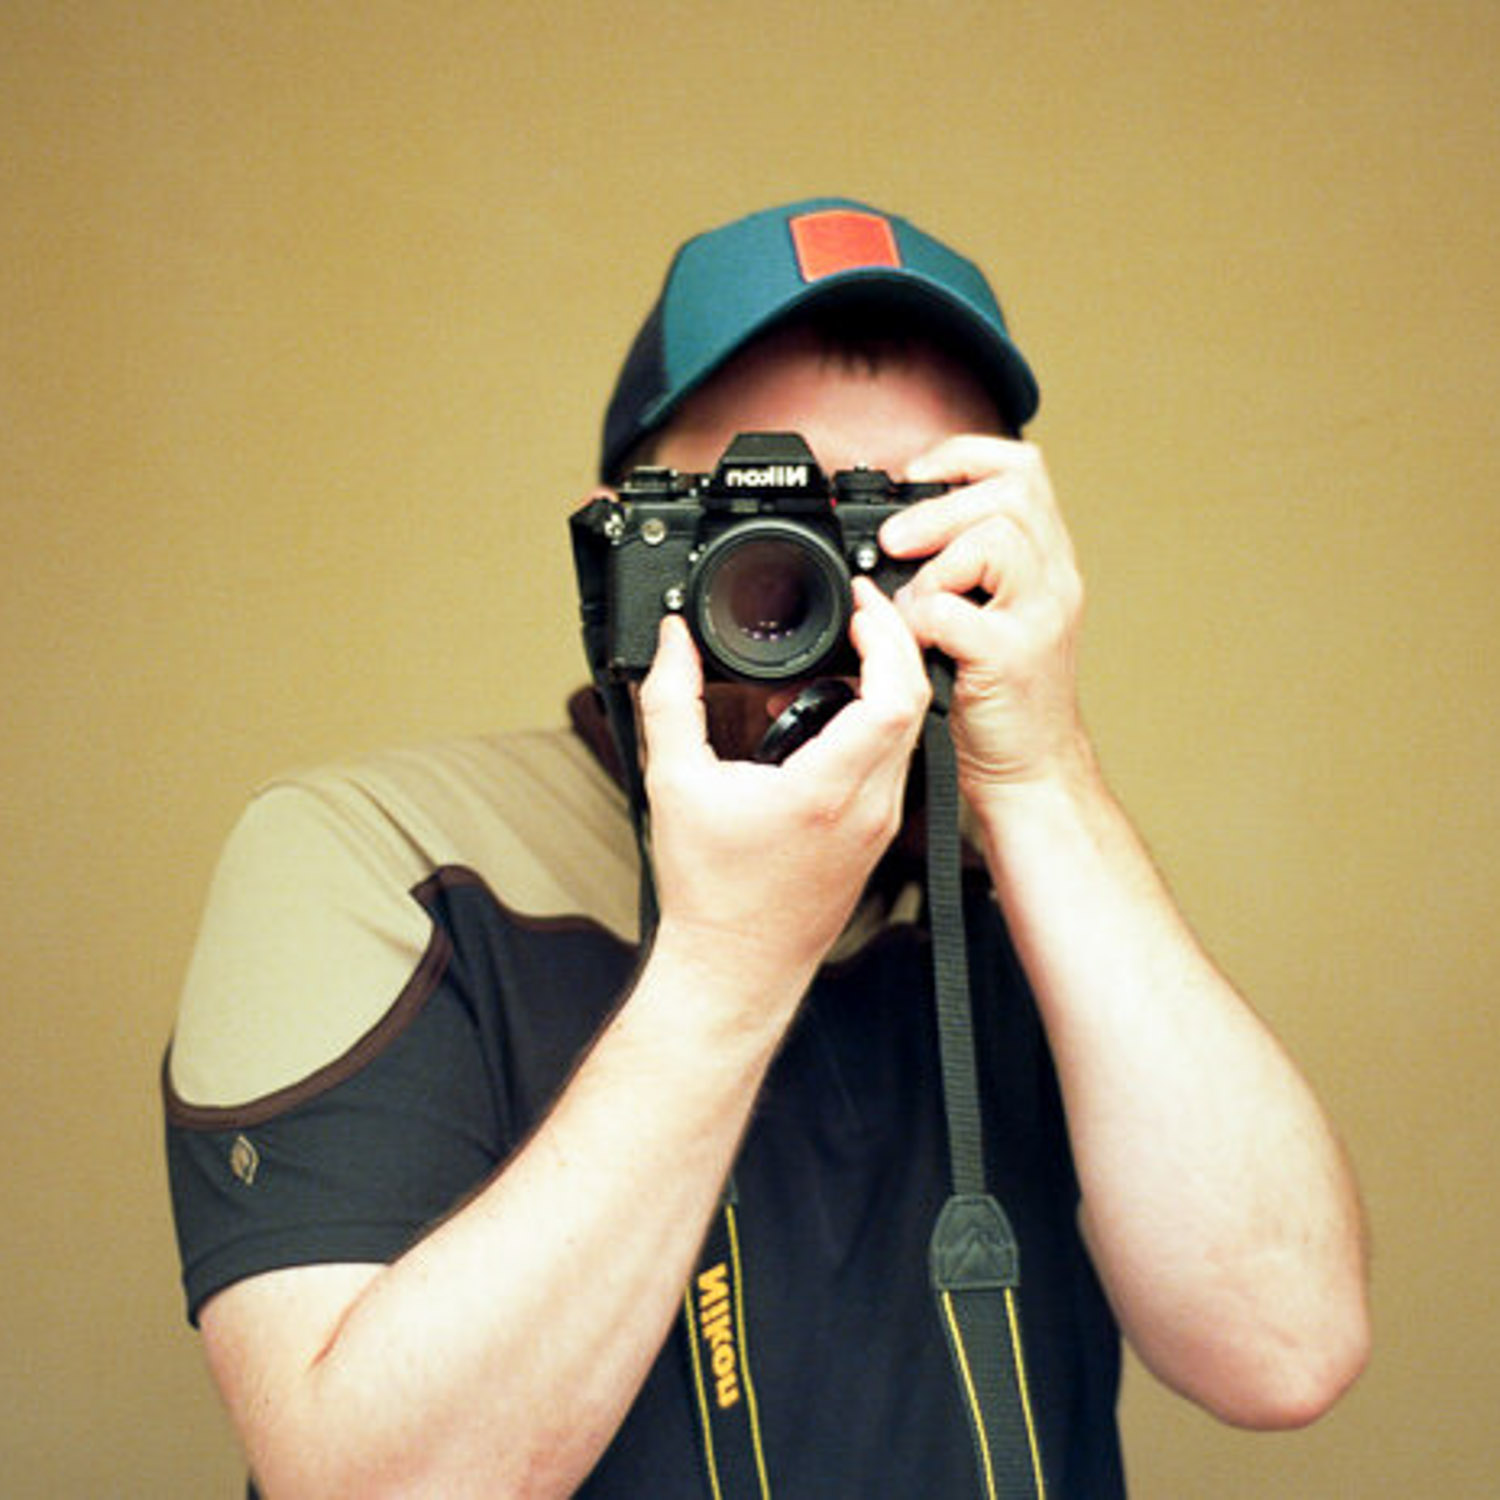 self-portrait using the Nikon F3 35mm film SLR camera